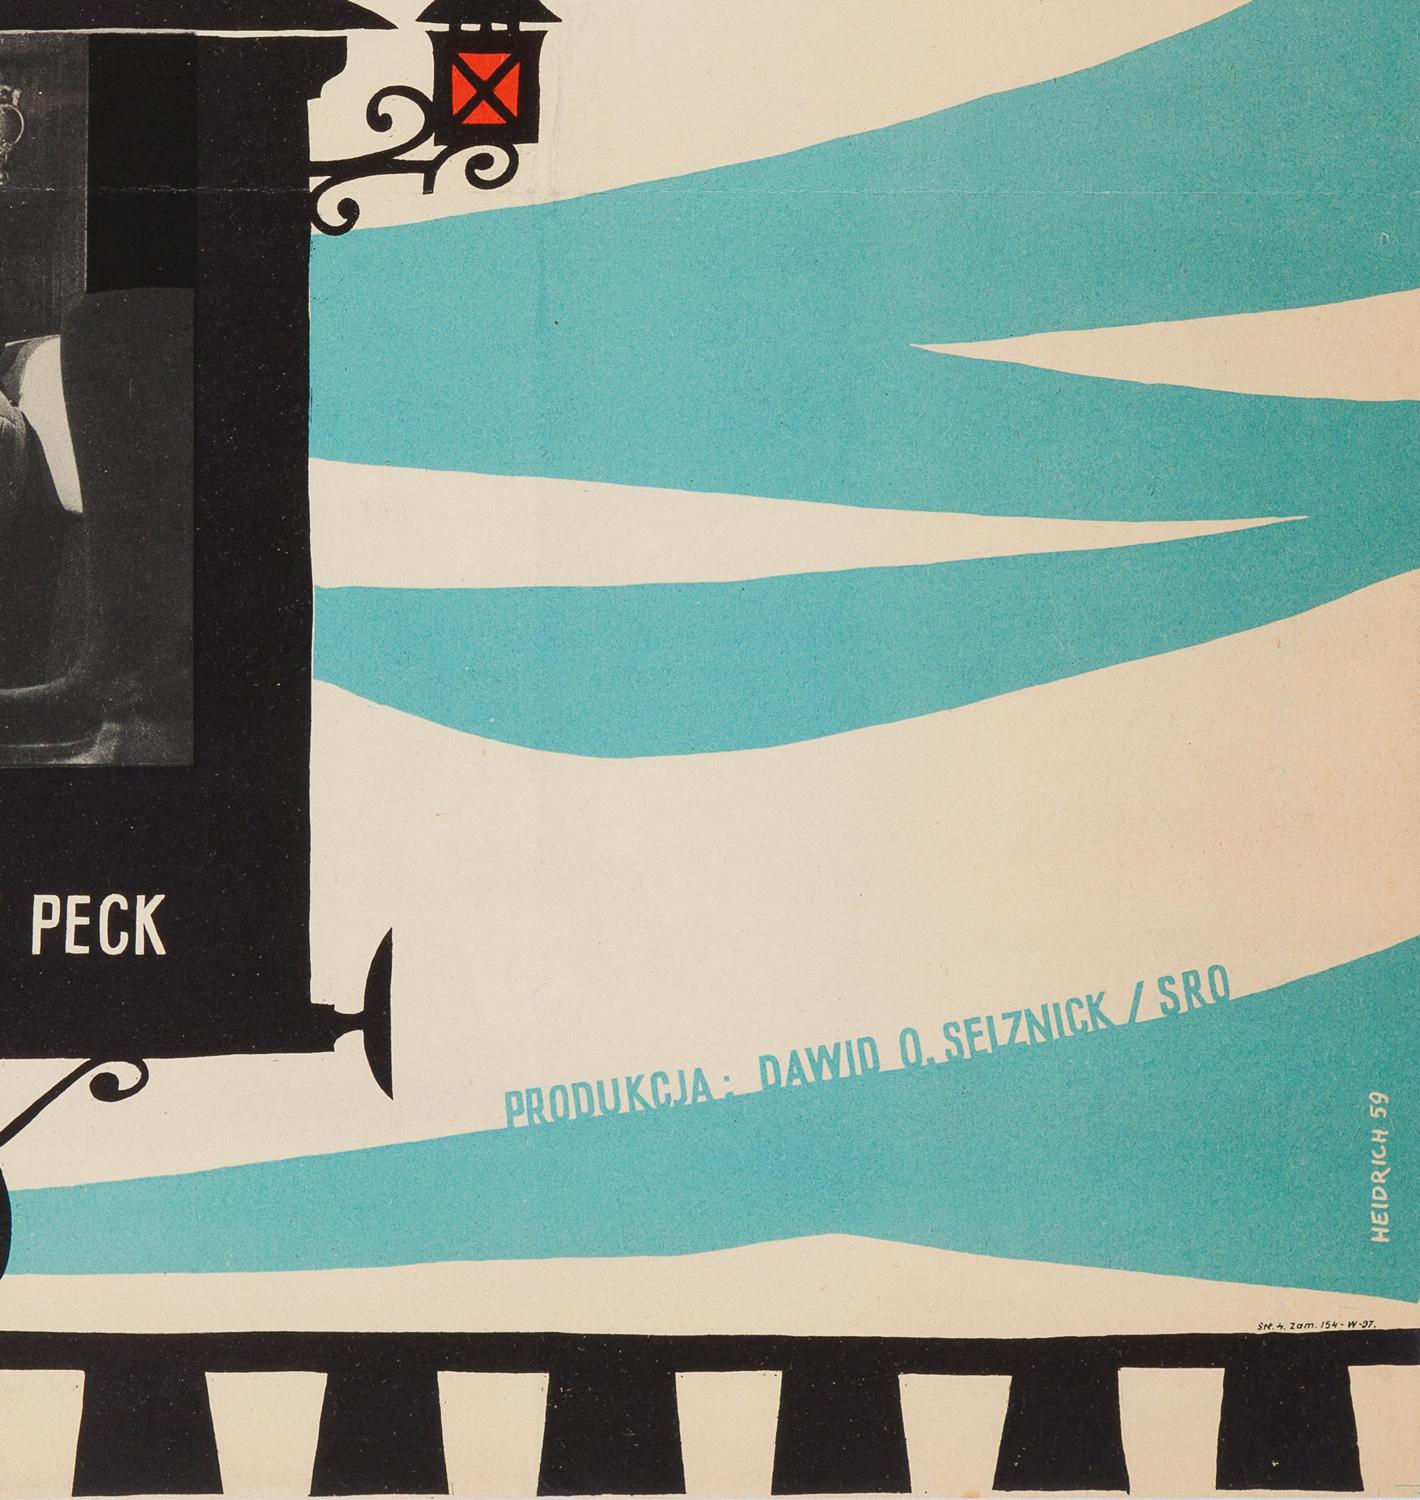 Spellbound Original Polish Film Poster, Andrzej Heidrich, 1959 2